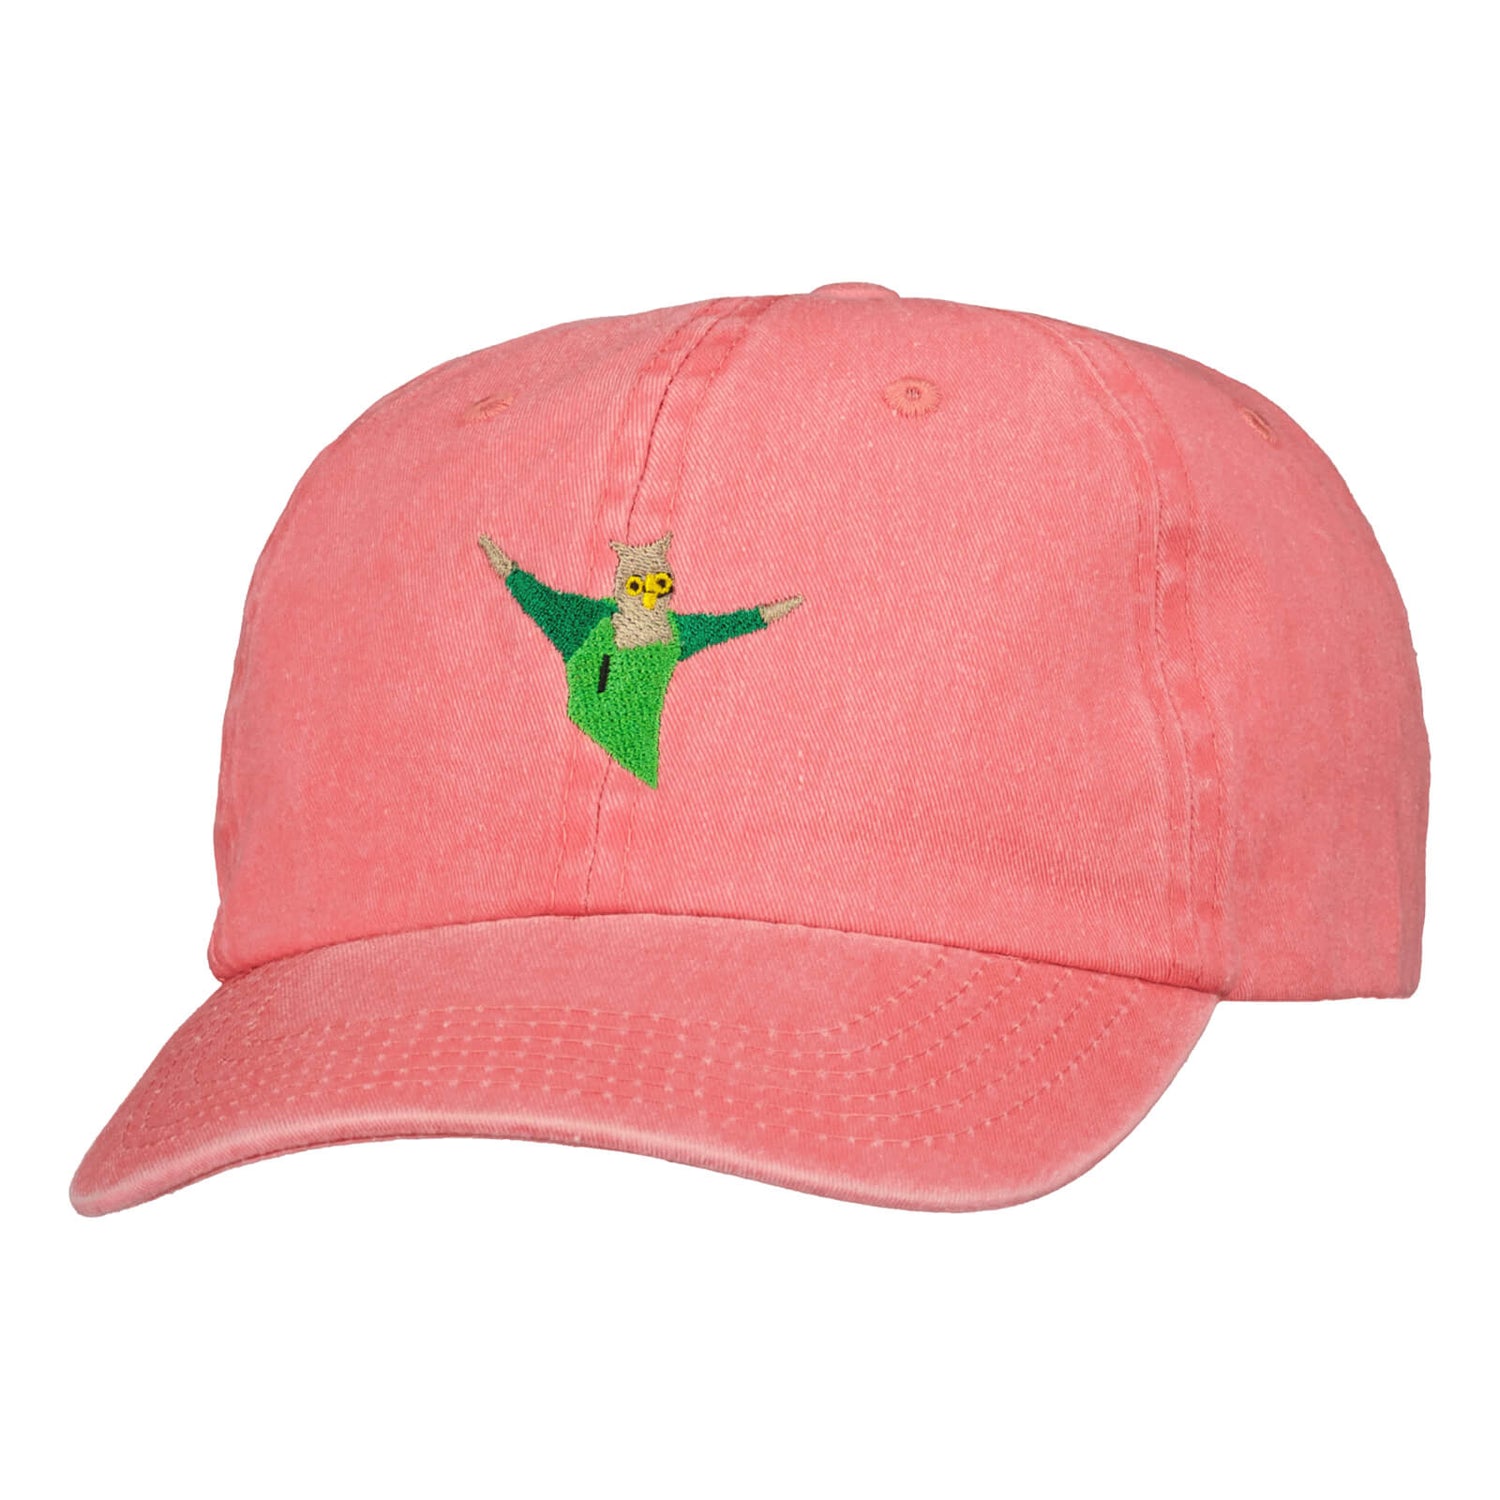 HUU Luke Washed cap, Pink